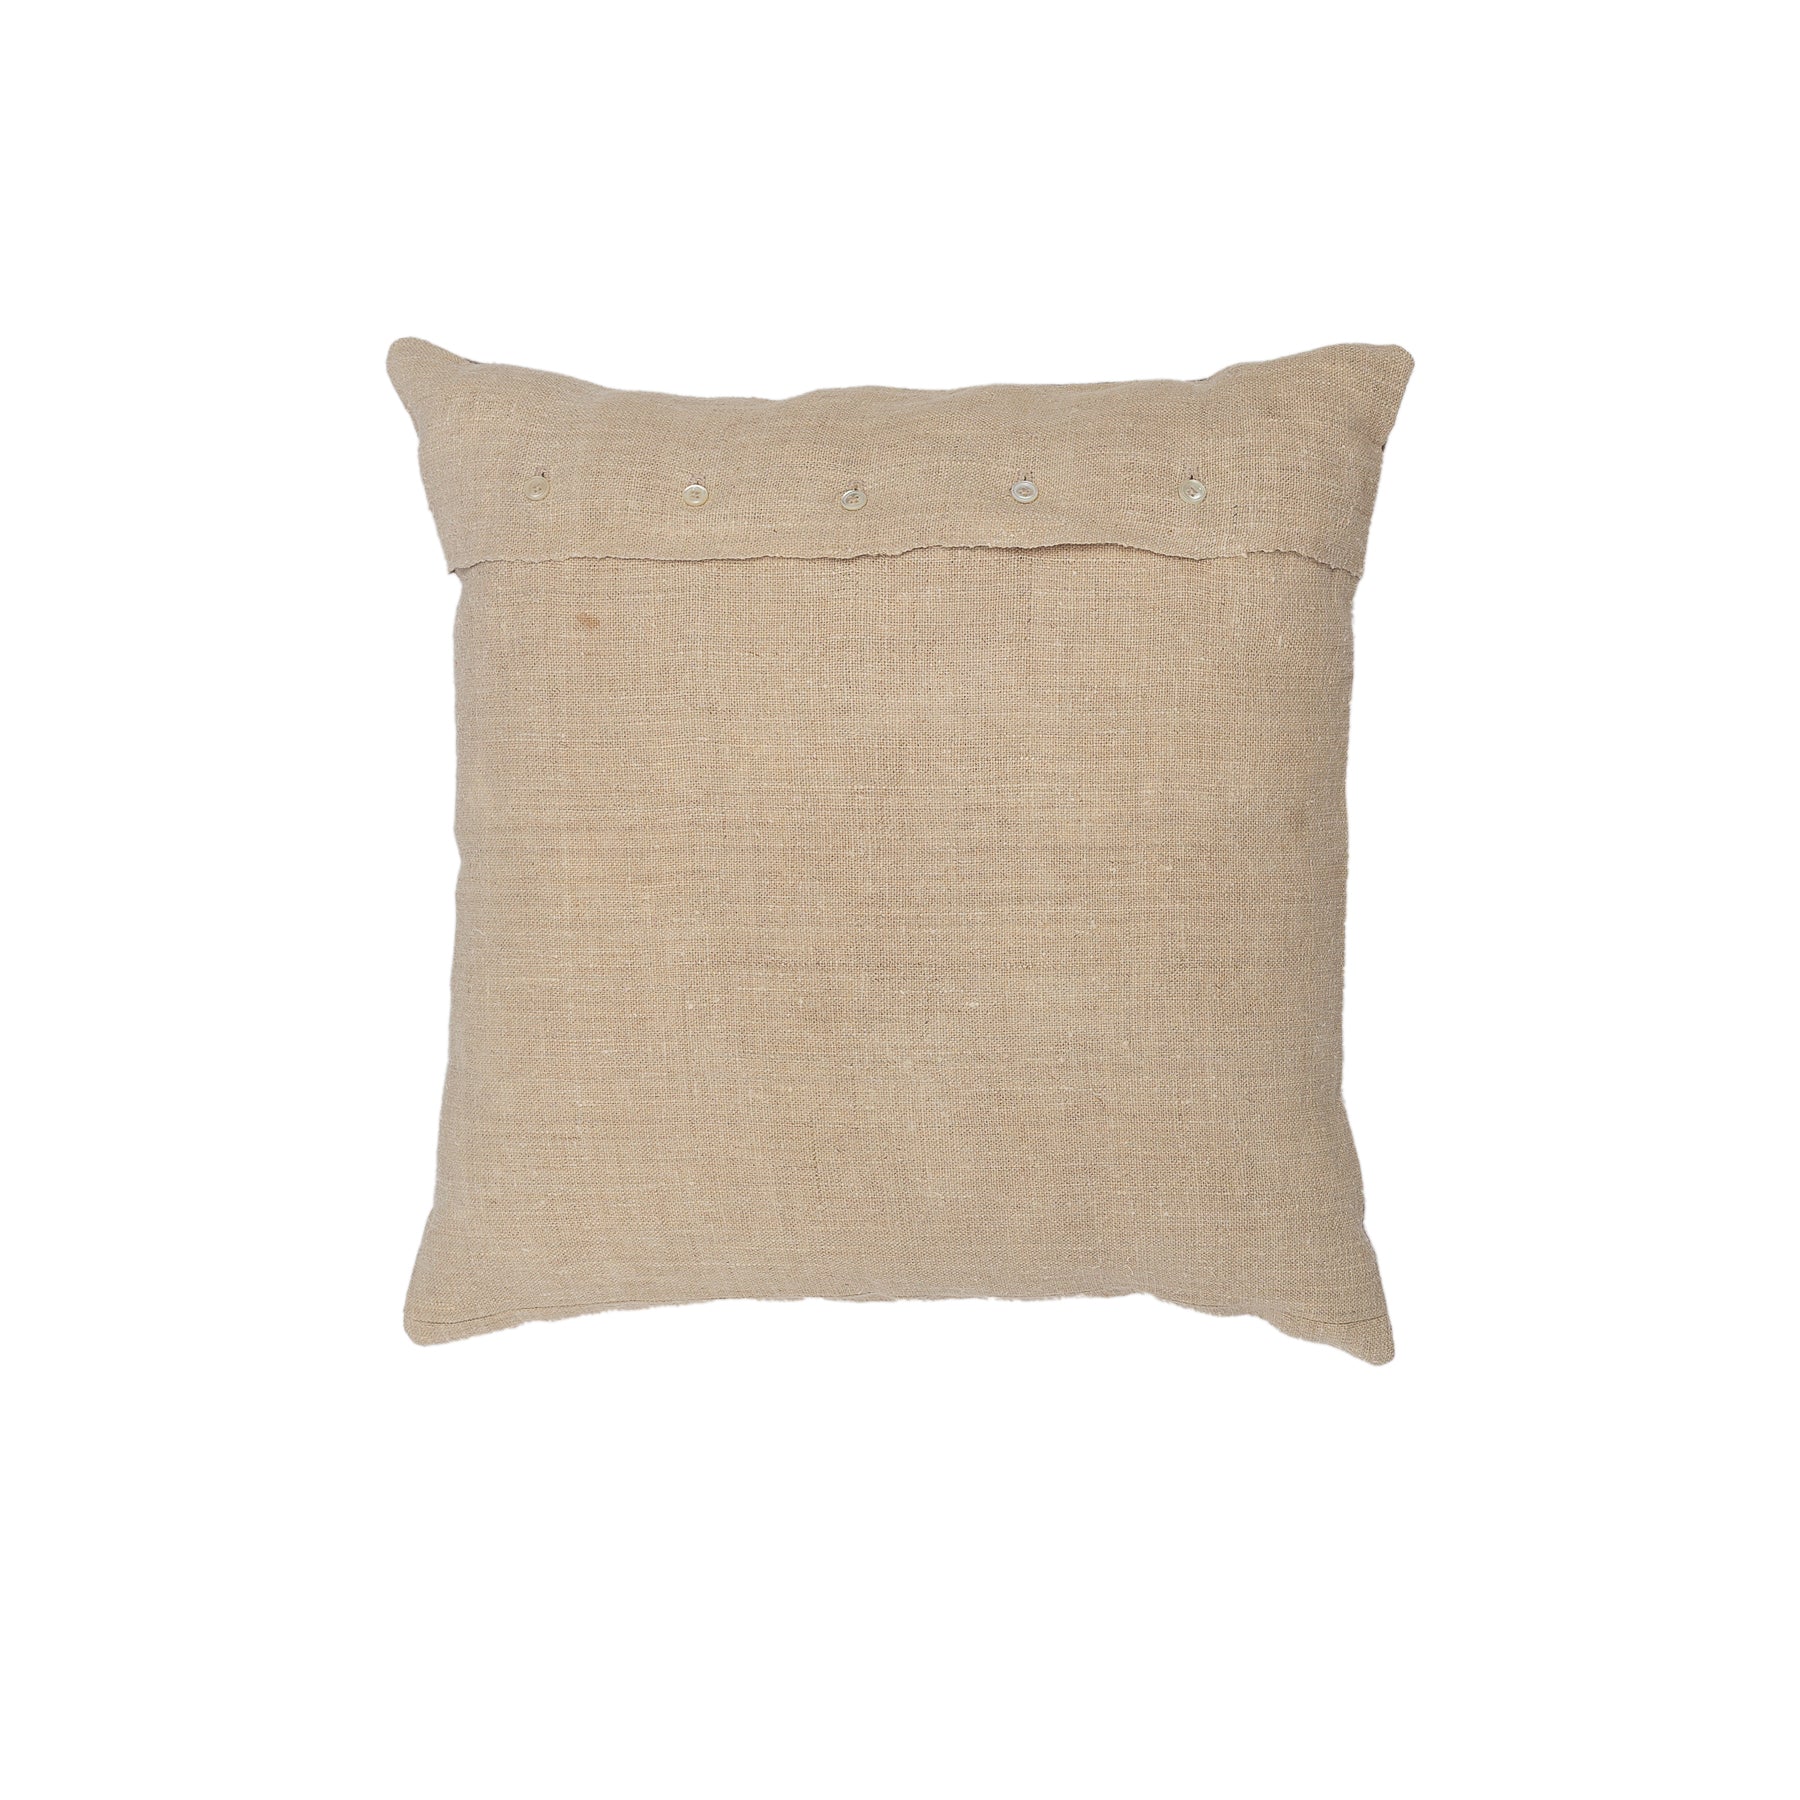 Adisi Brown Plaid Wool And Linen Cushion